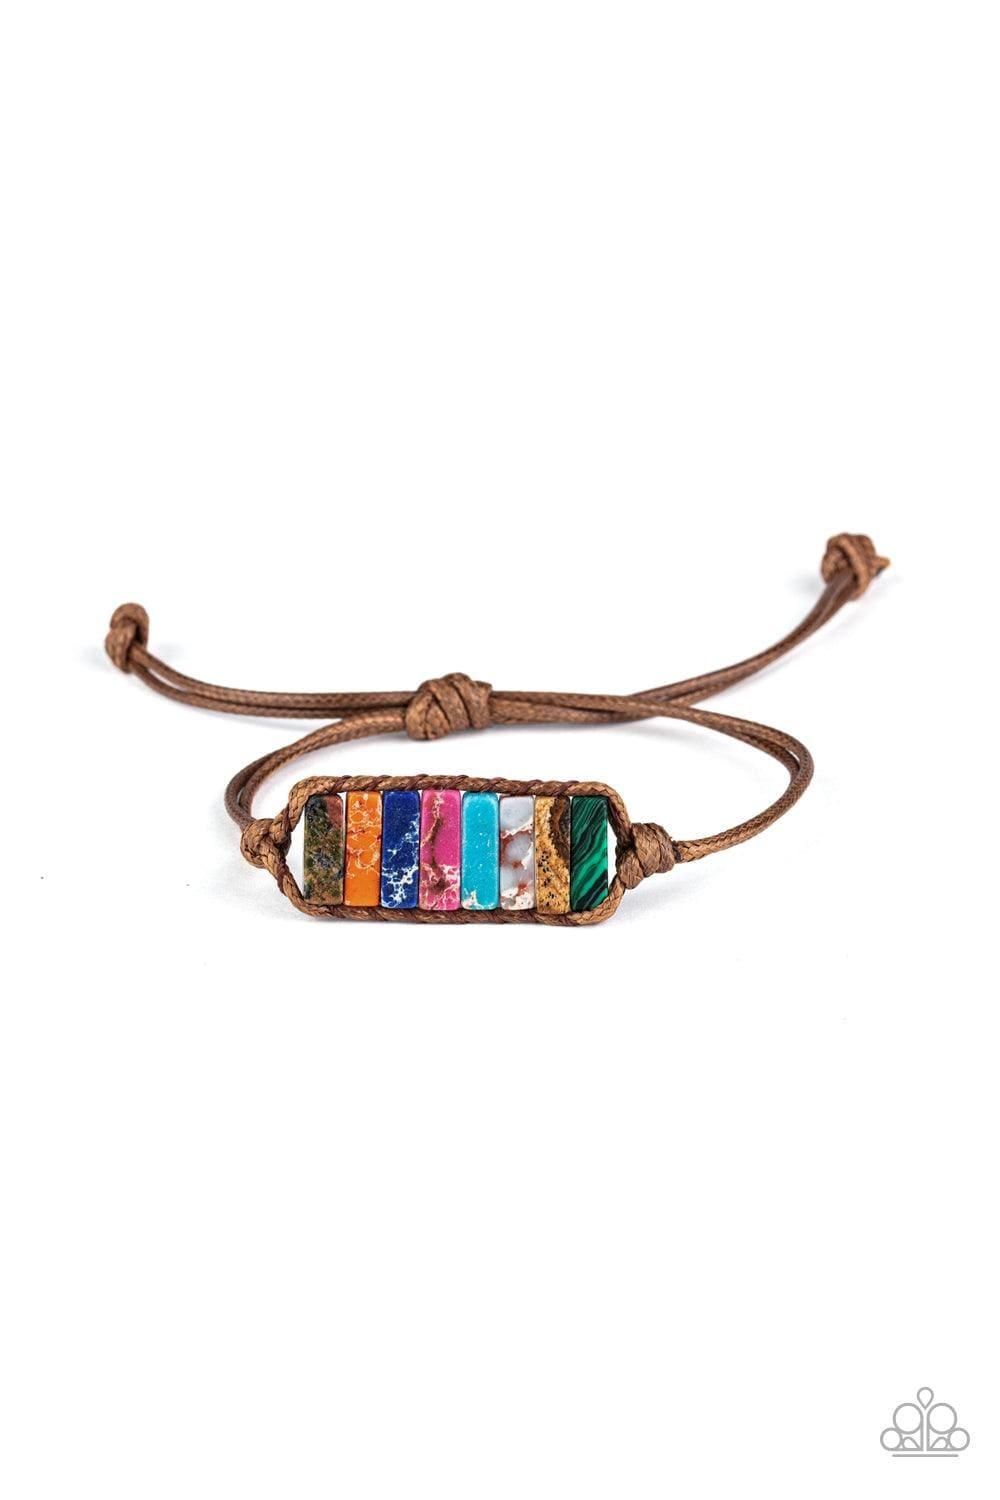 Paparazzi Accessories - Canyon Warrior - Multicolor Urban Bracelet - Bling by JessieK